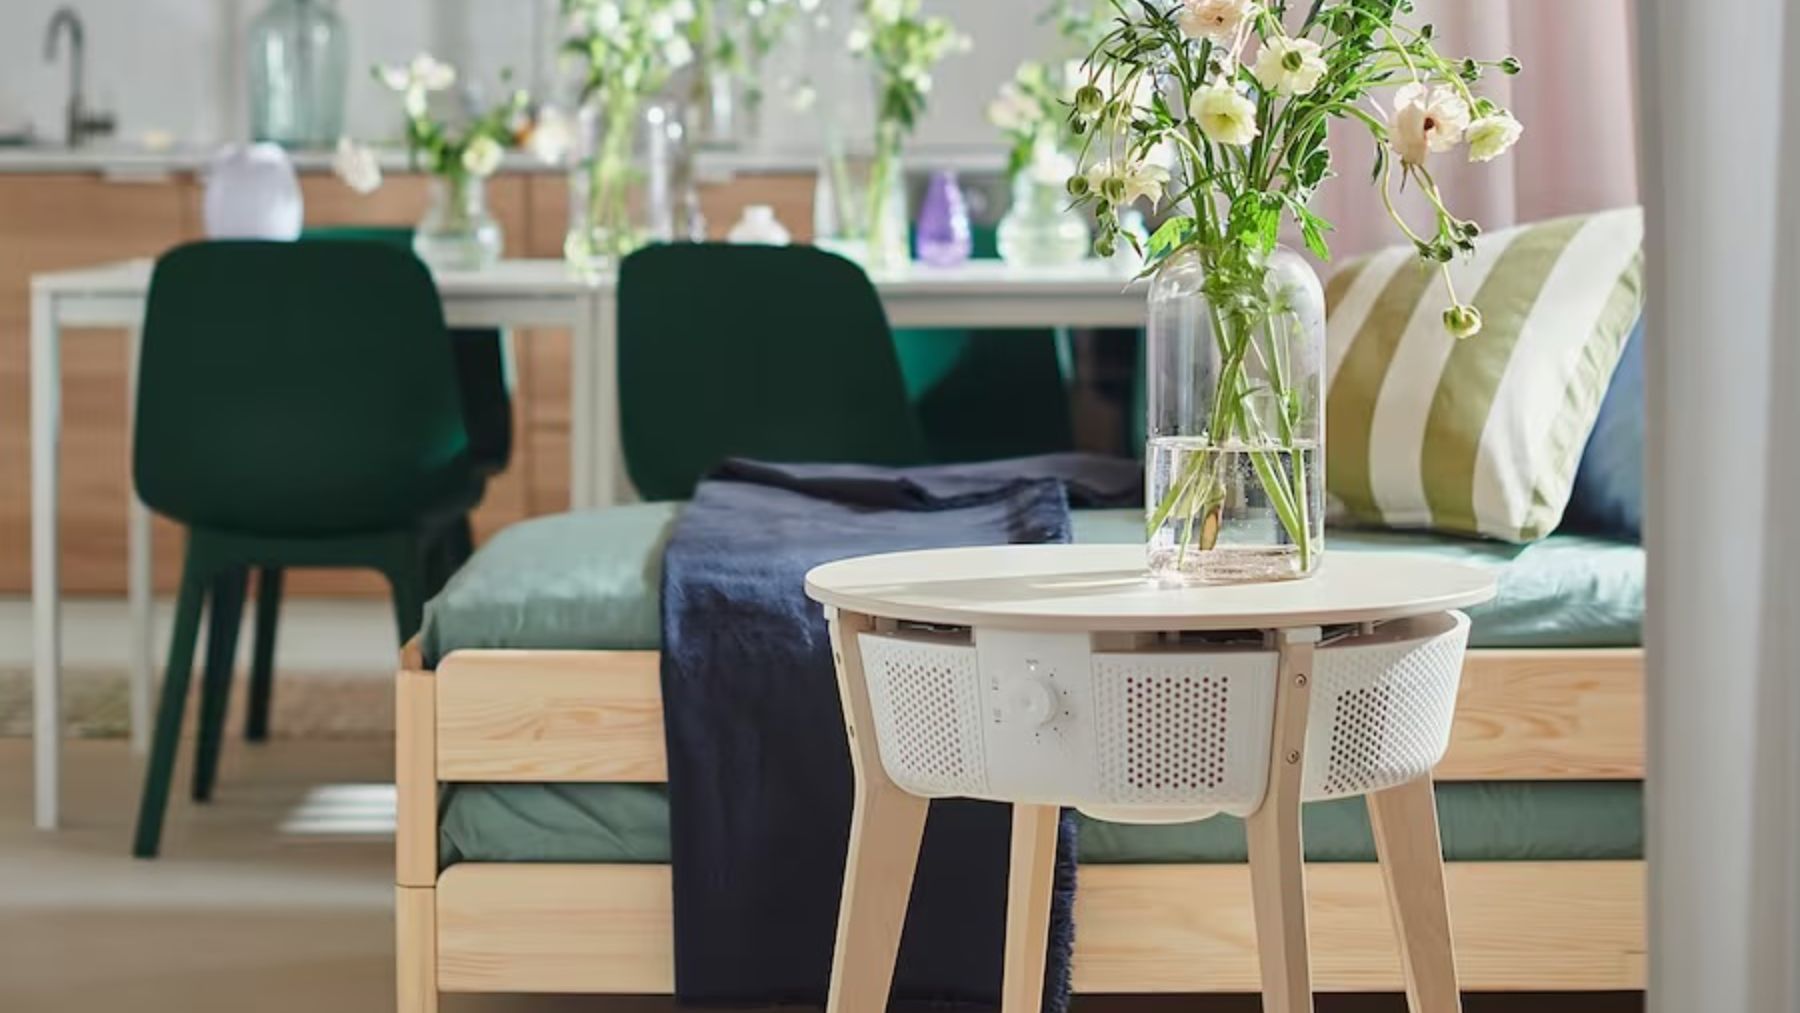 Ikea triunfa con la mesa que purifica el aire